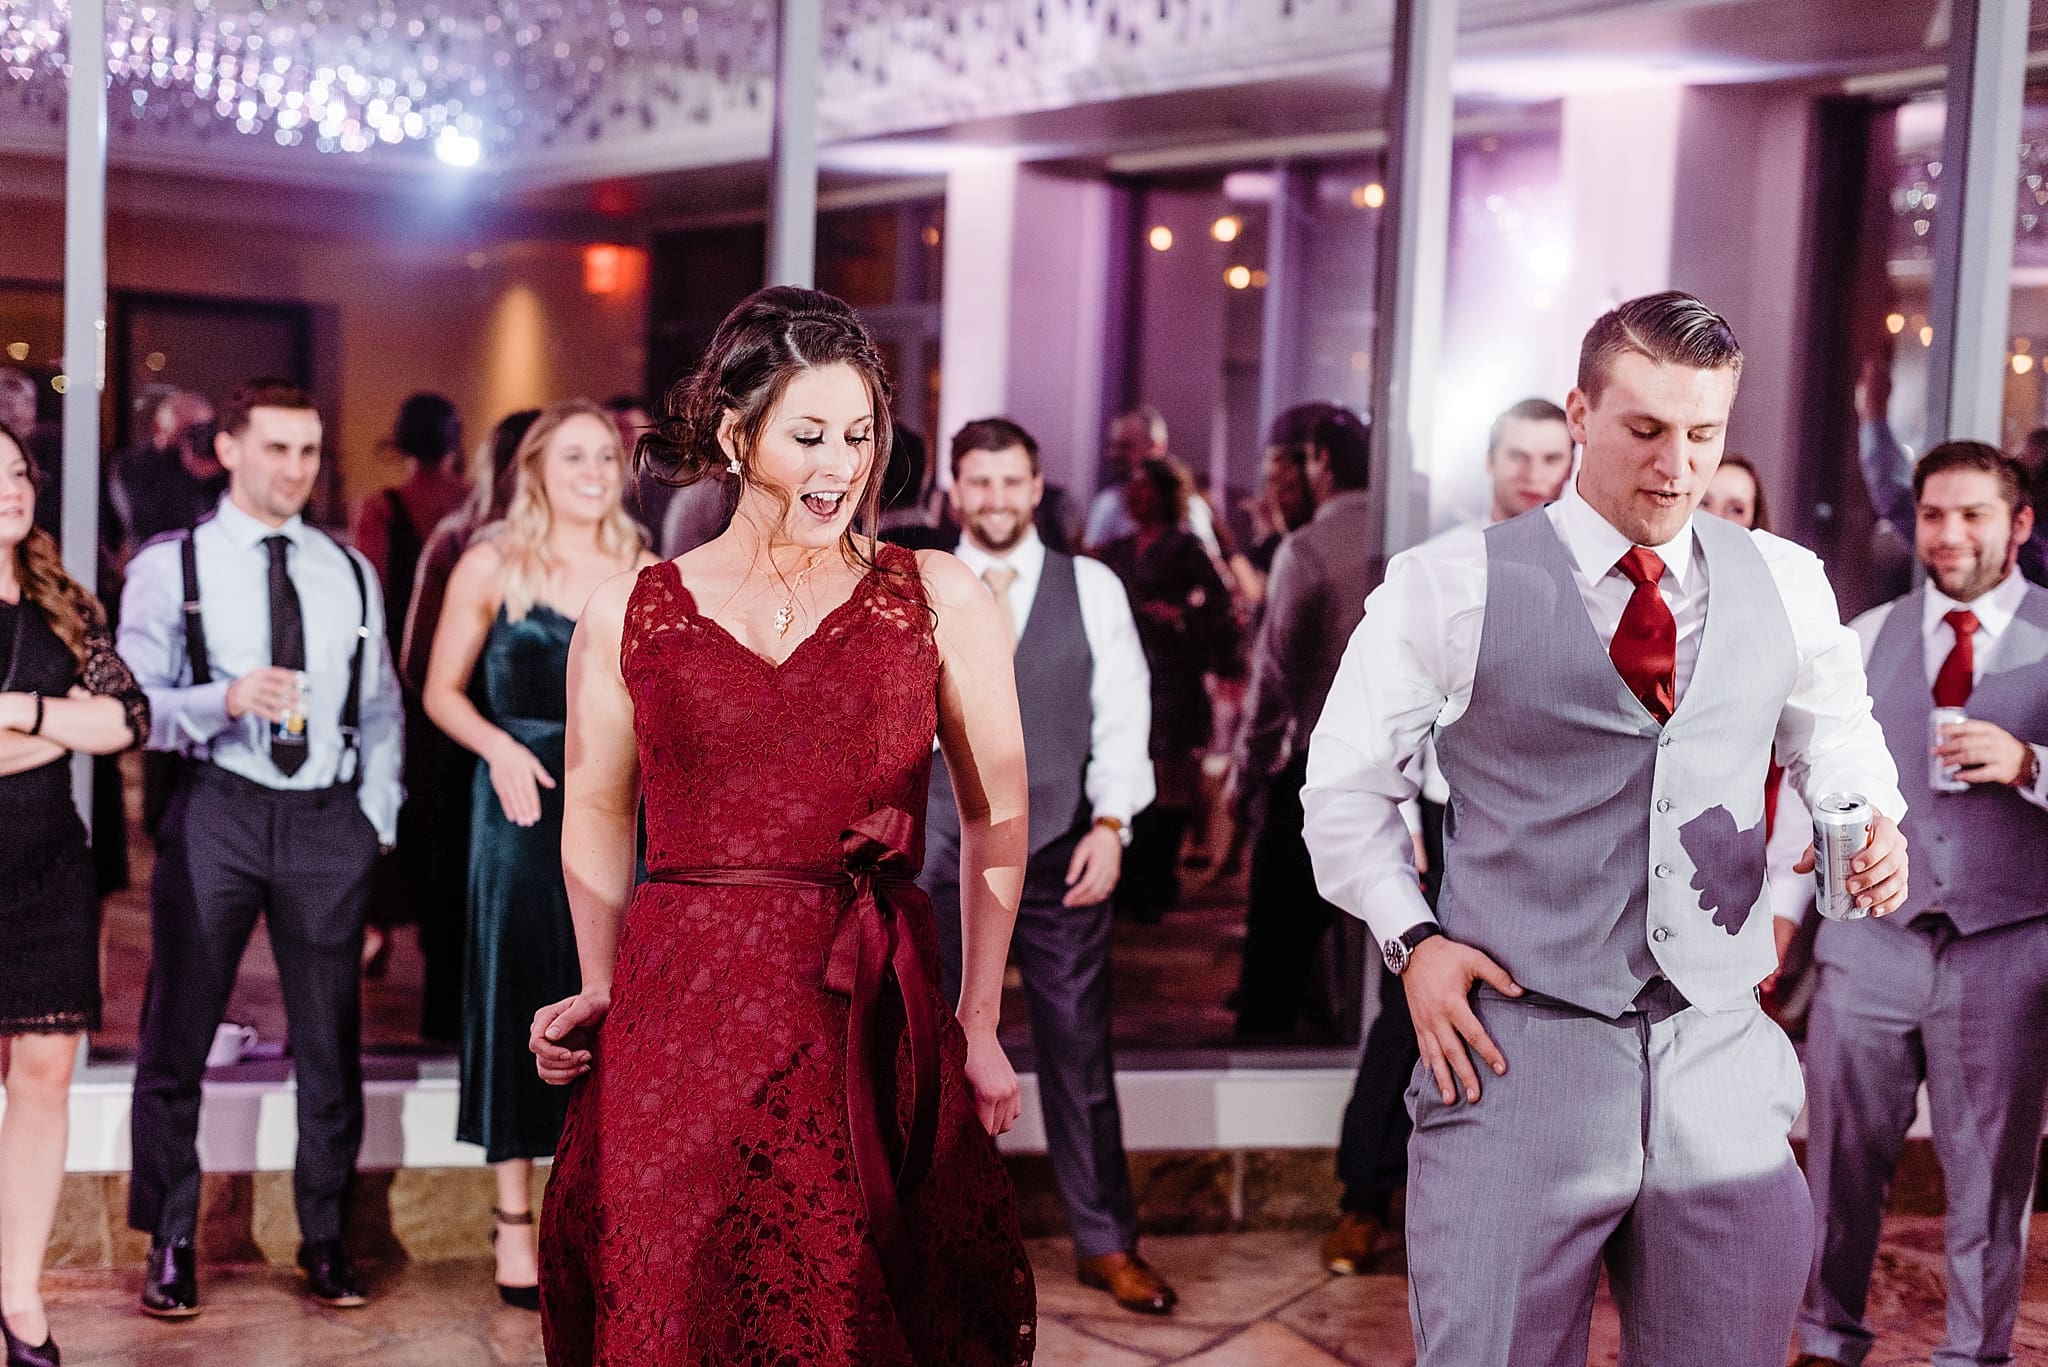 wedding reception dancing photos at peaks resort and spa in telluride